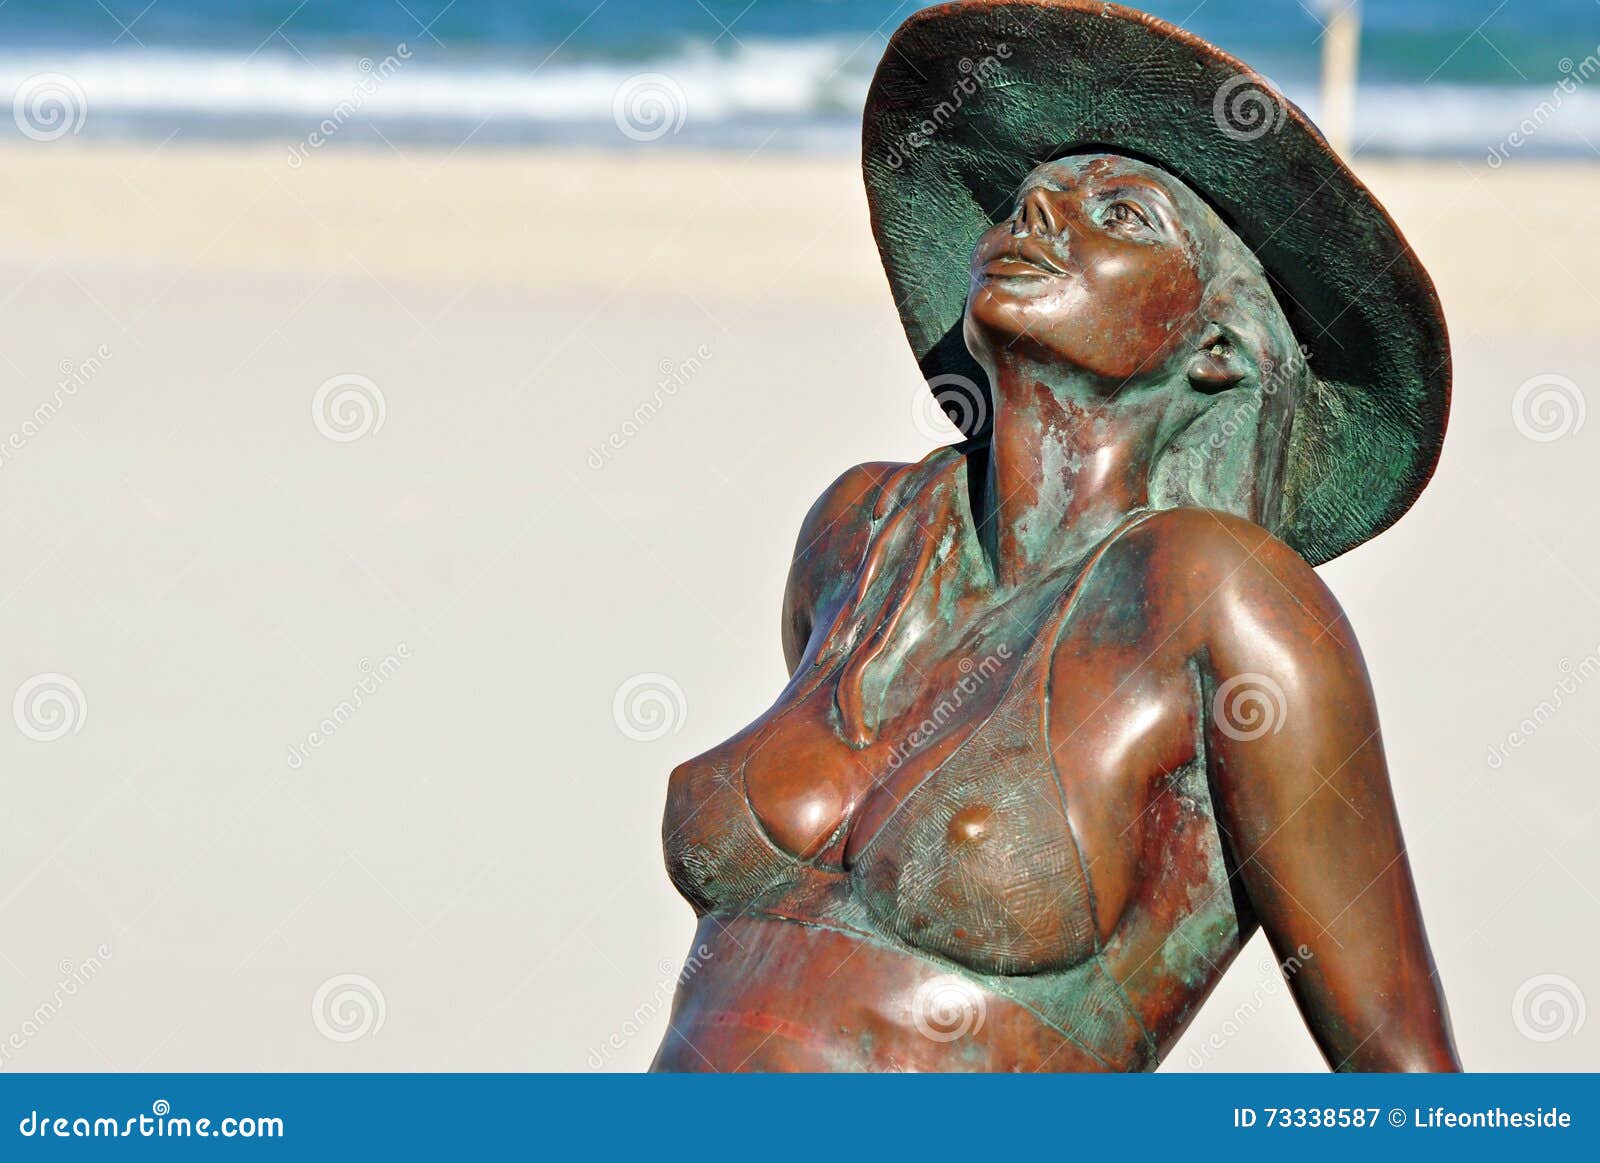 Hot Girl Nude Beach